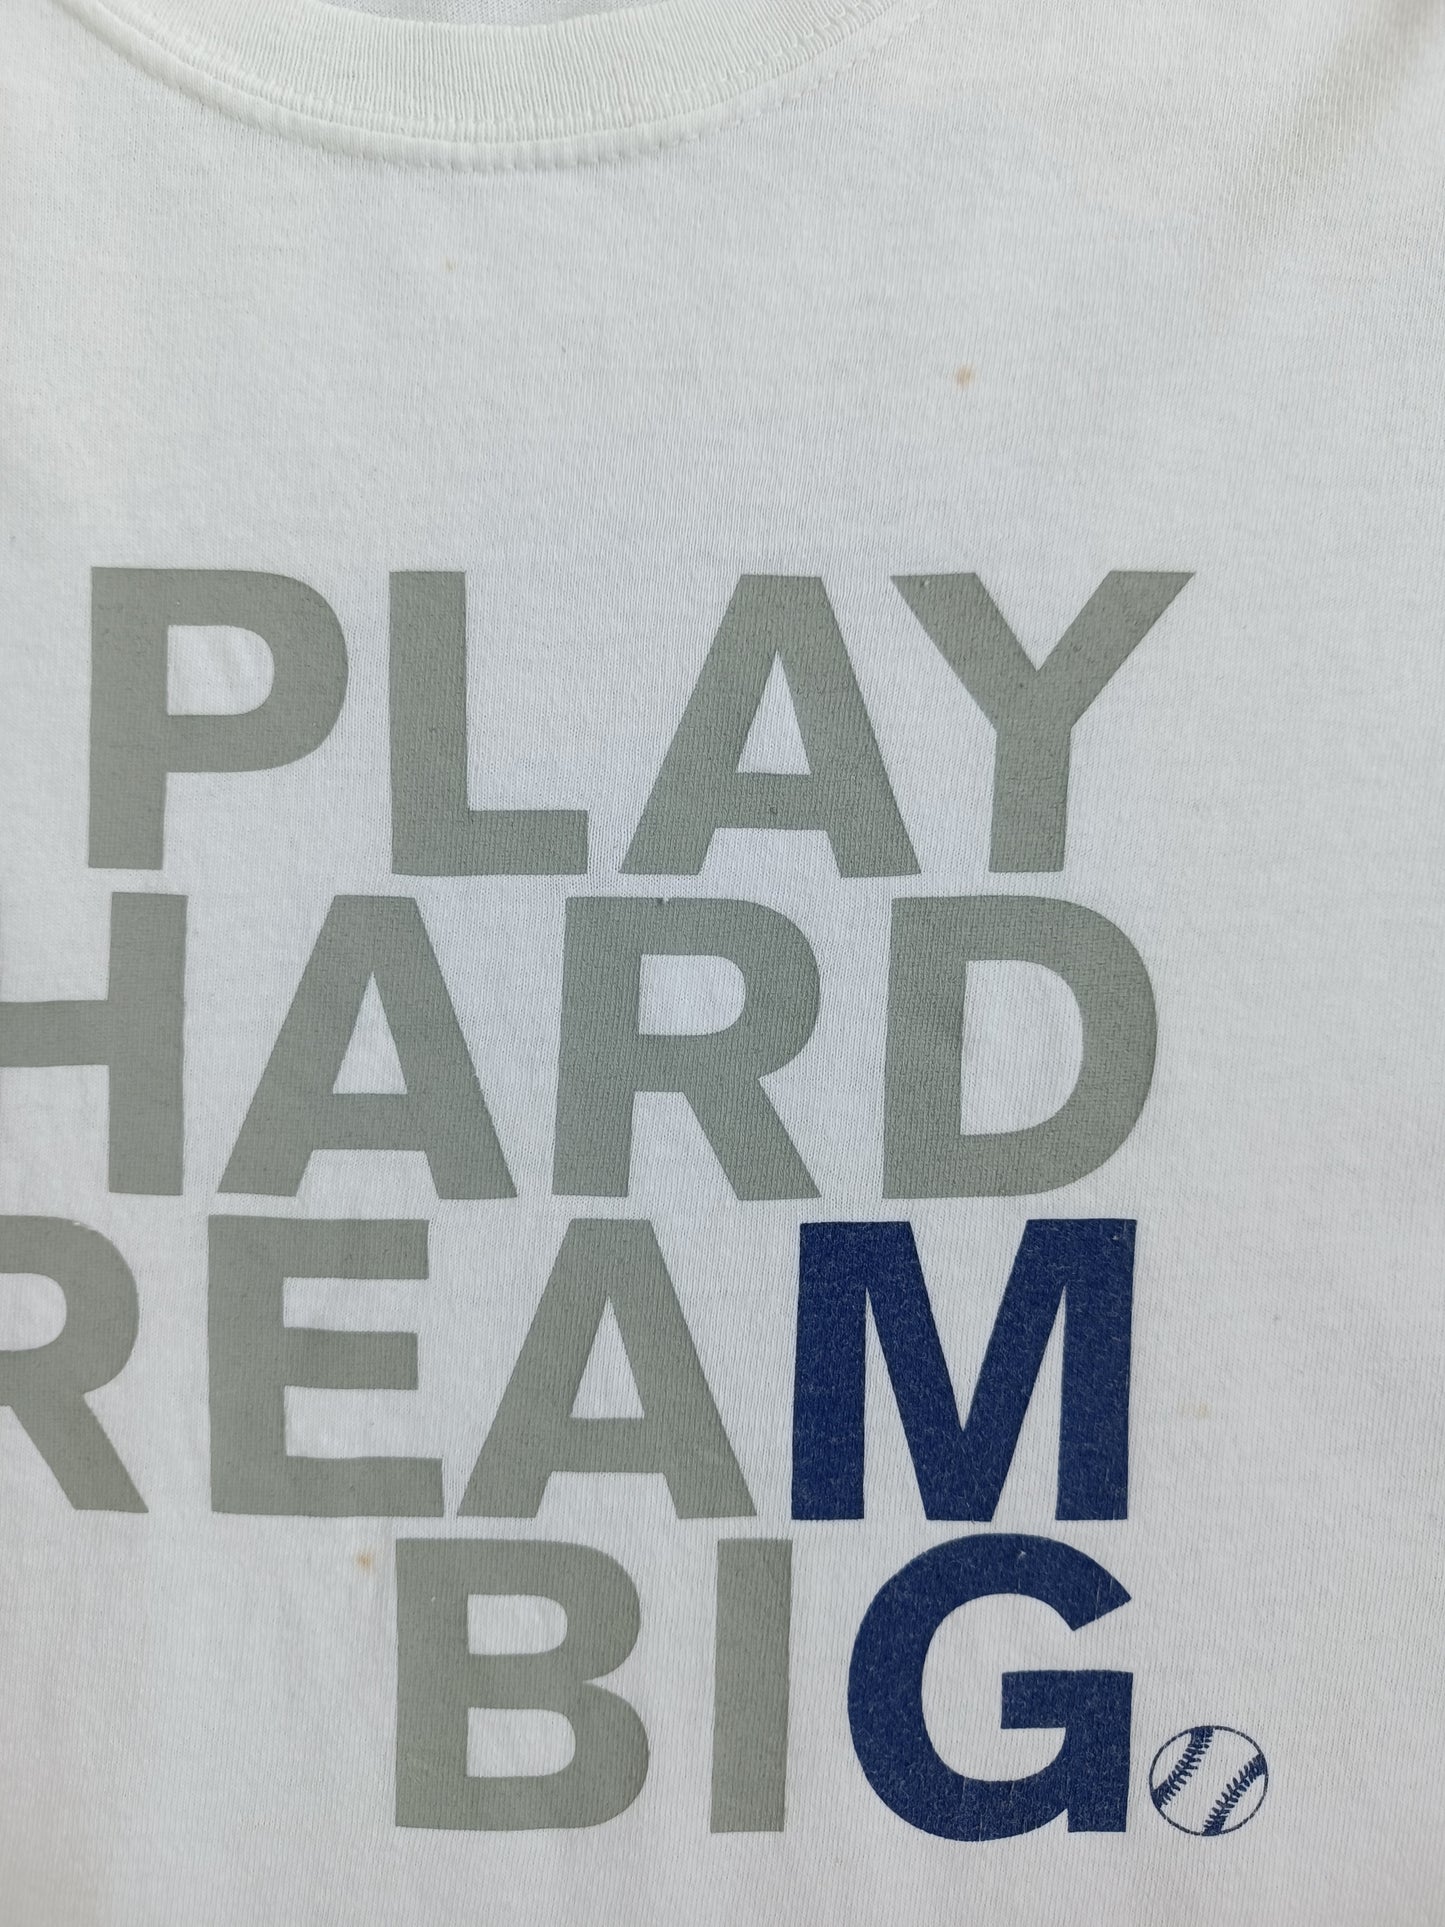 Nike Play Hard Dream Big - L